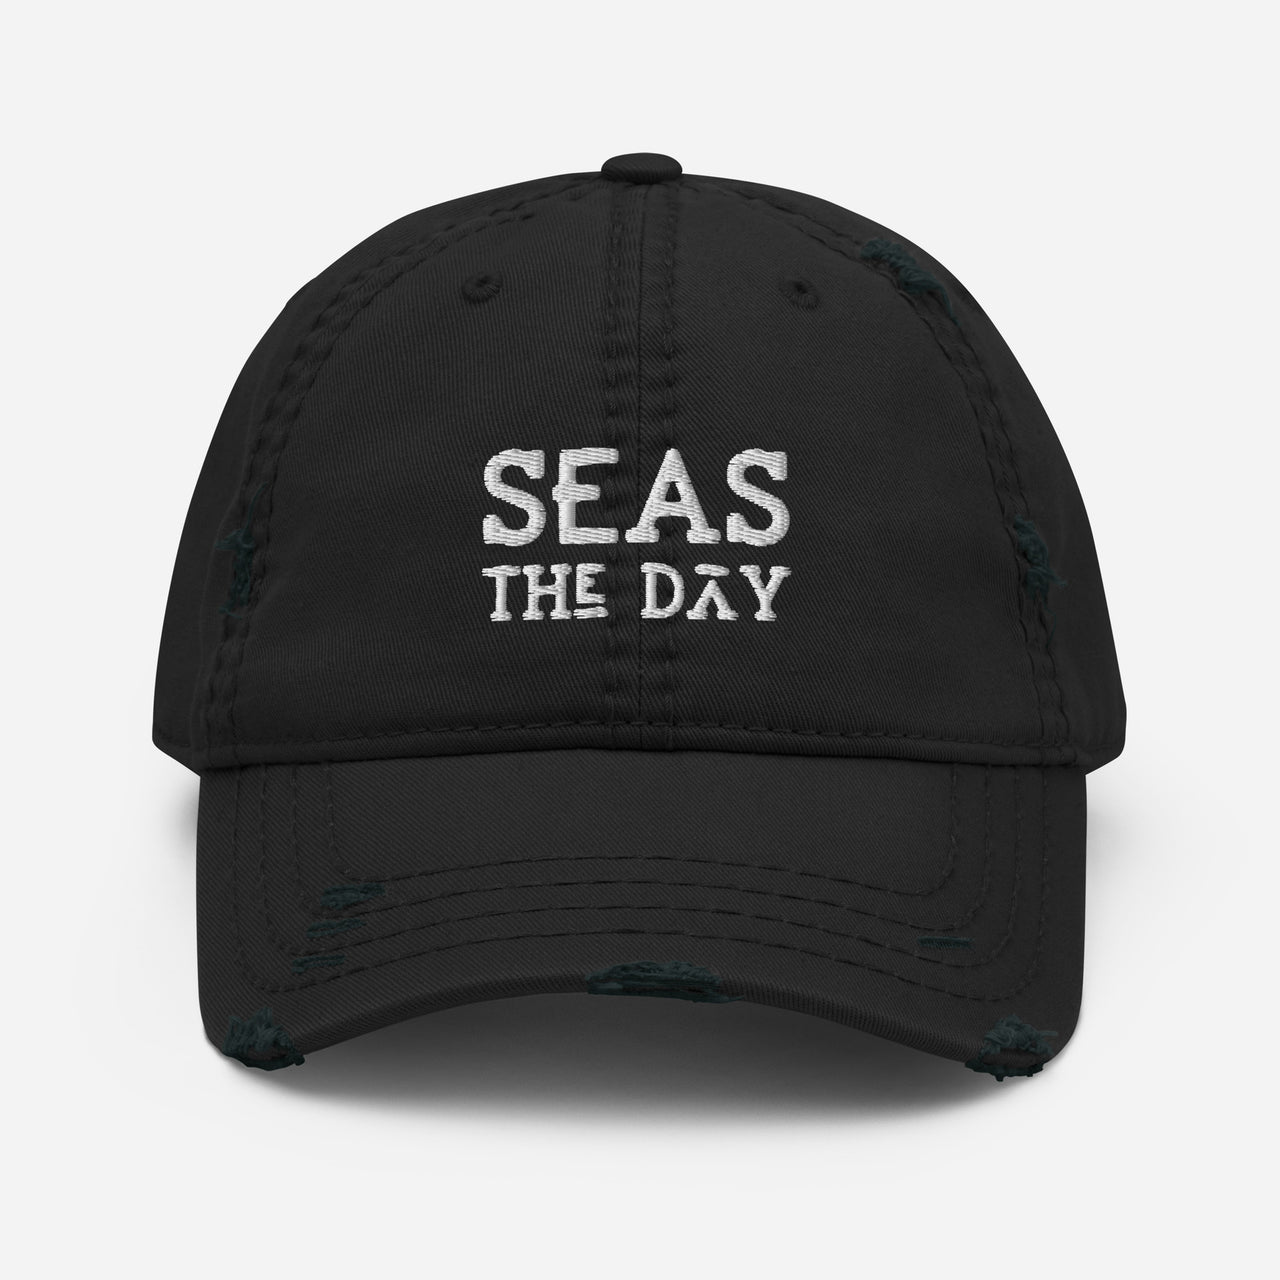 Seas The Day Distressed Hat, Baseball Cap, Black